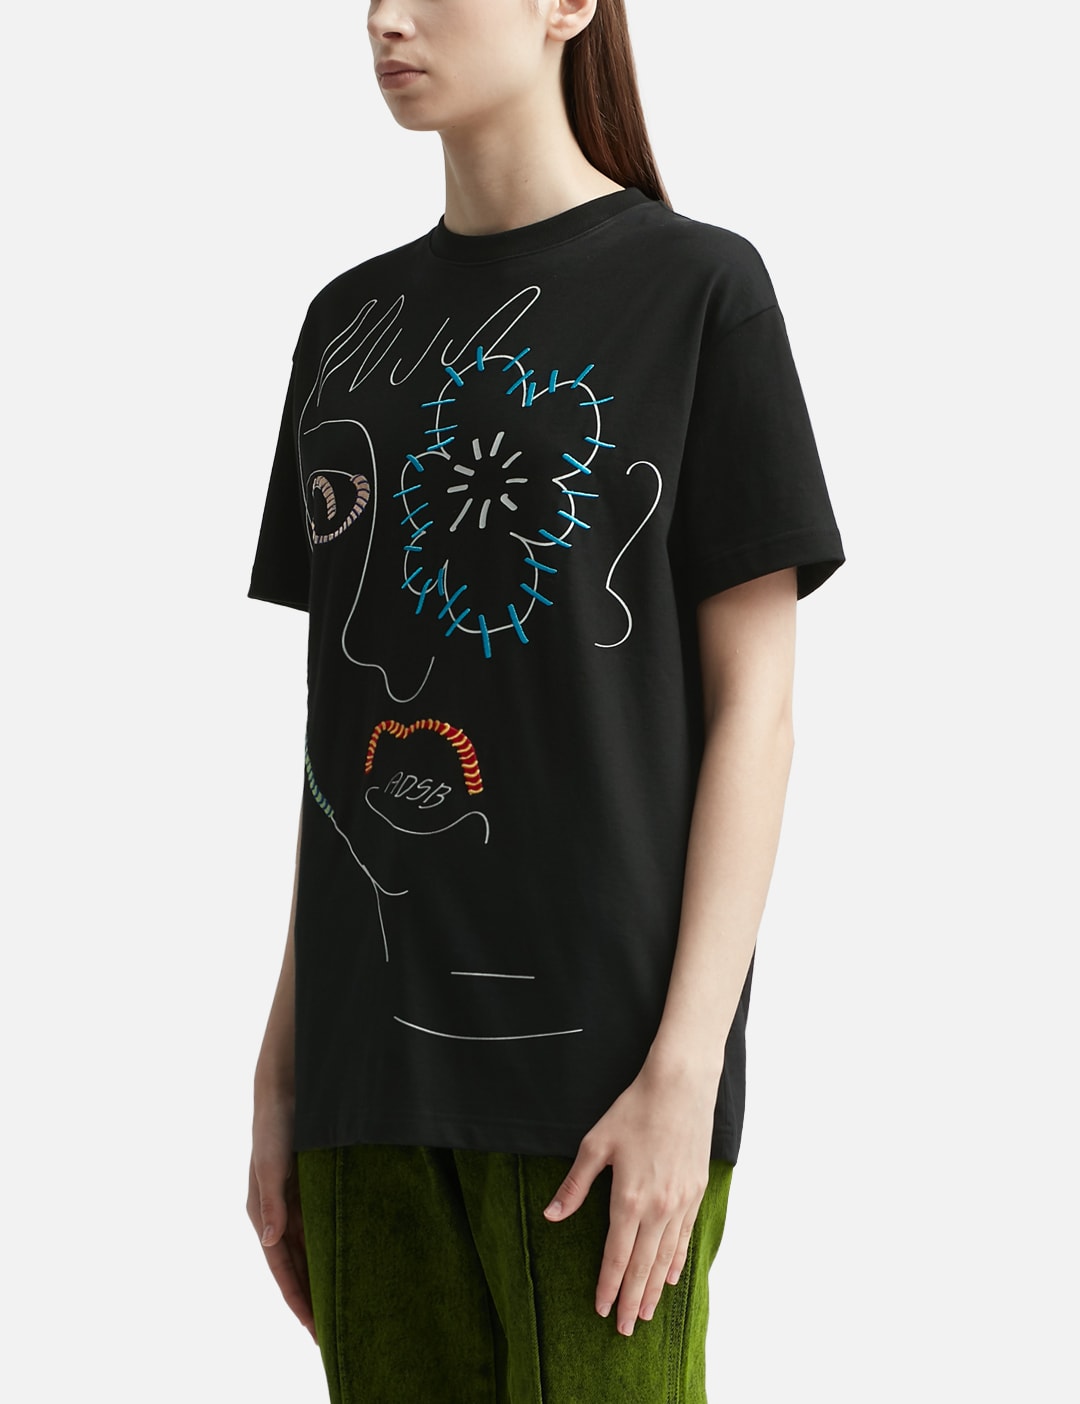 Flower Man T-shirt Placeholder Image